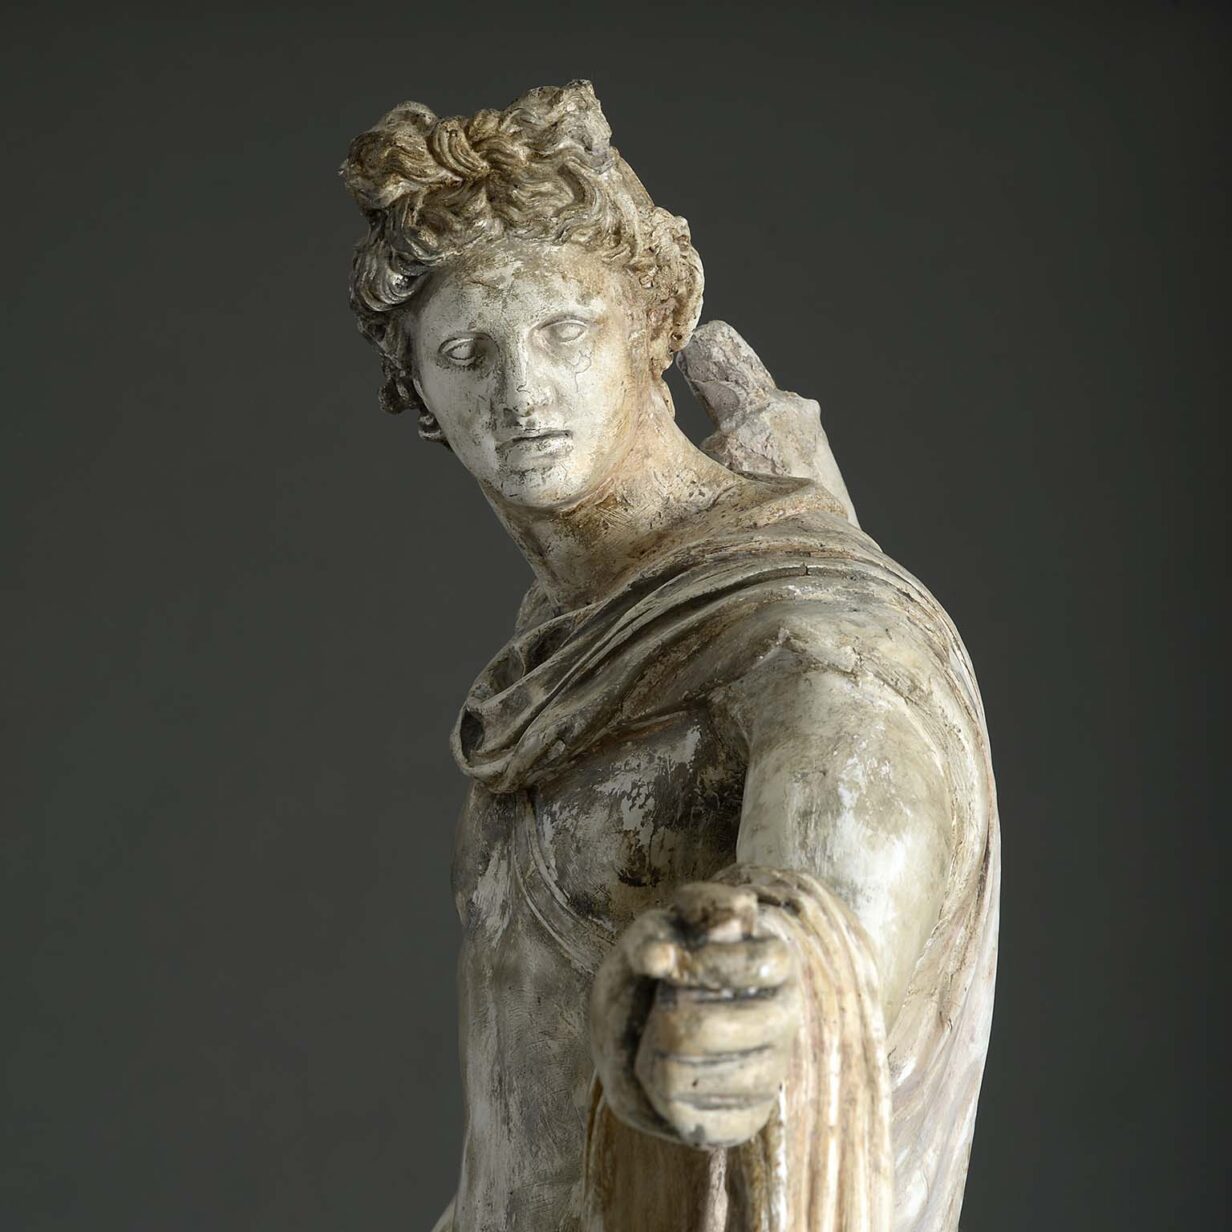 Large plaster figure depicting the apollo belvedere